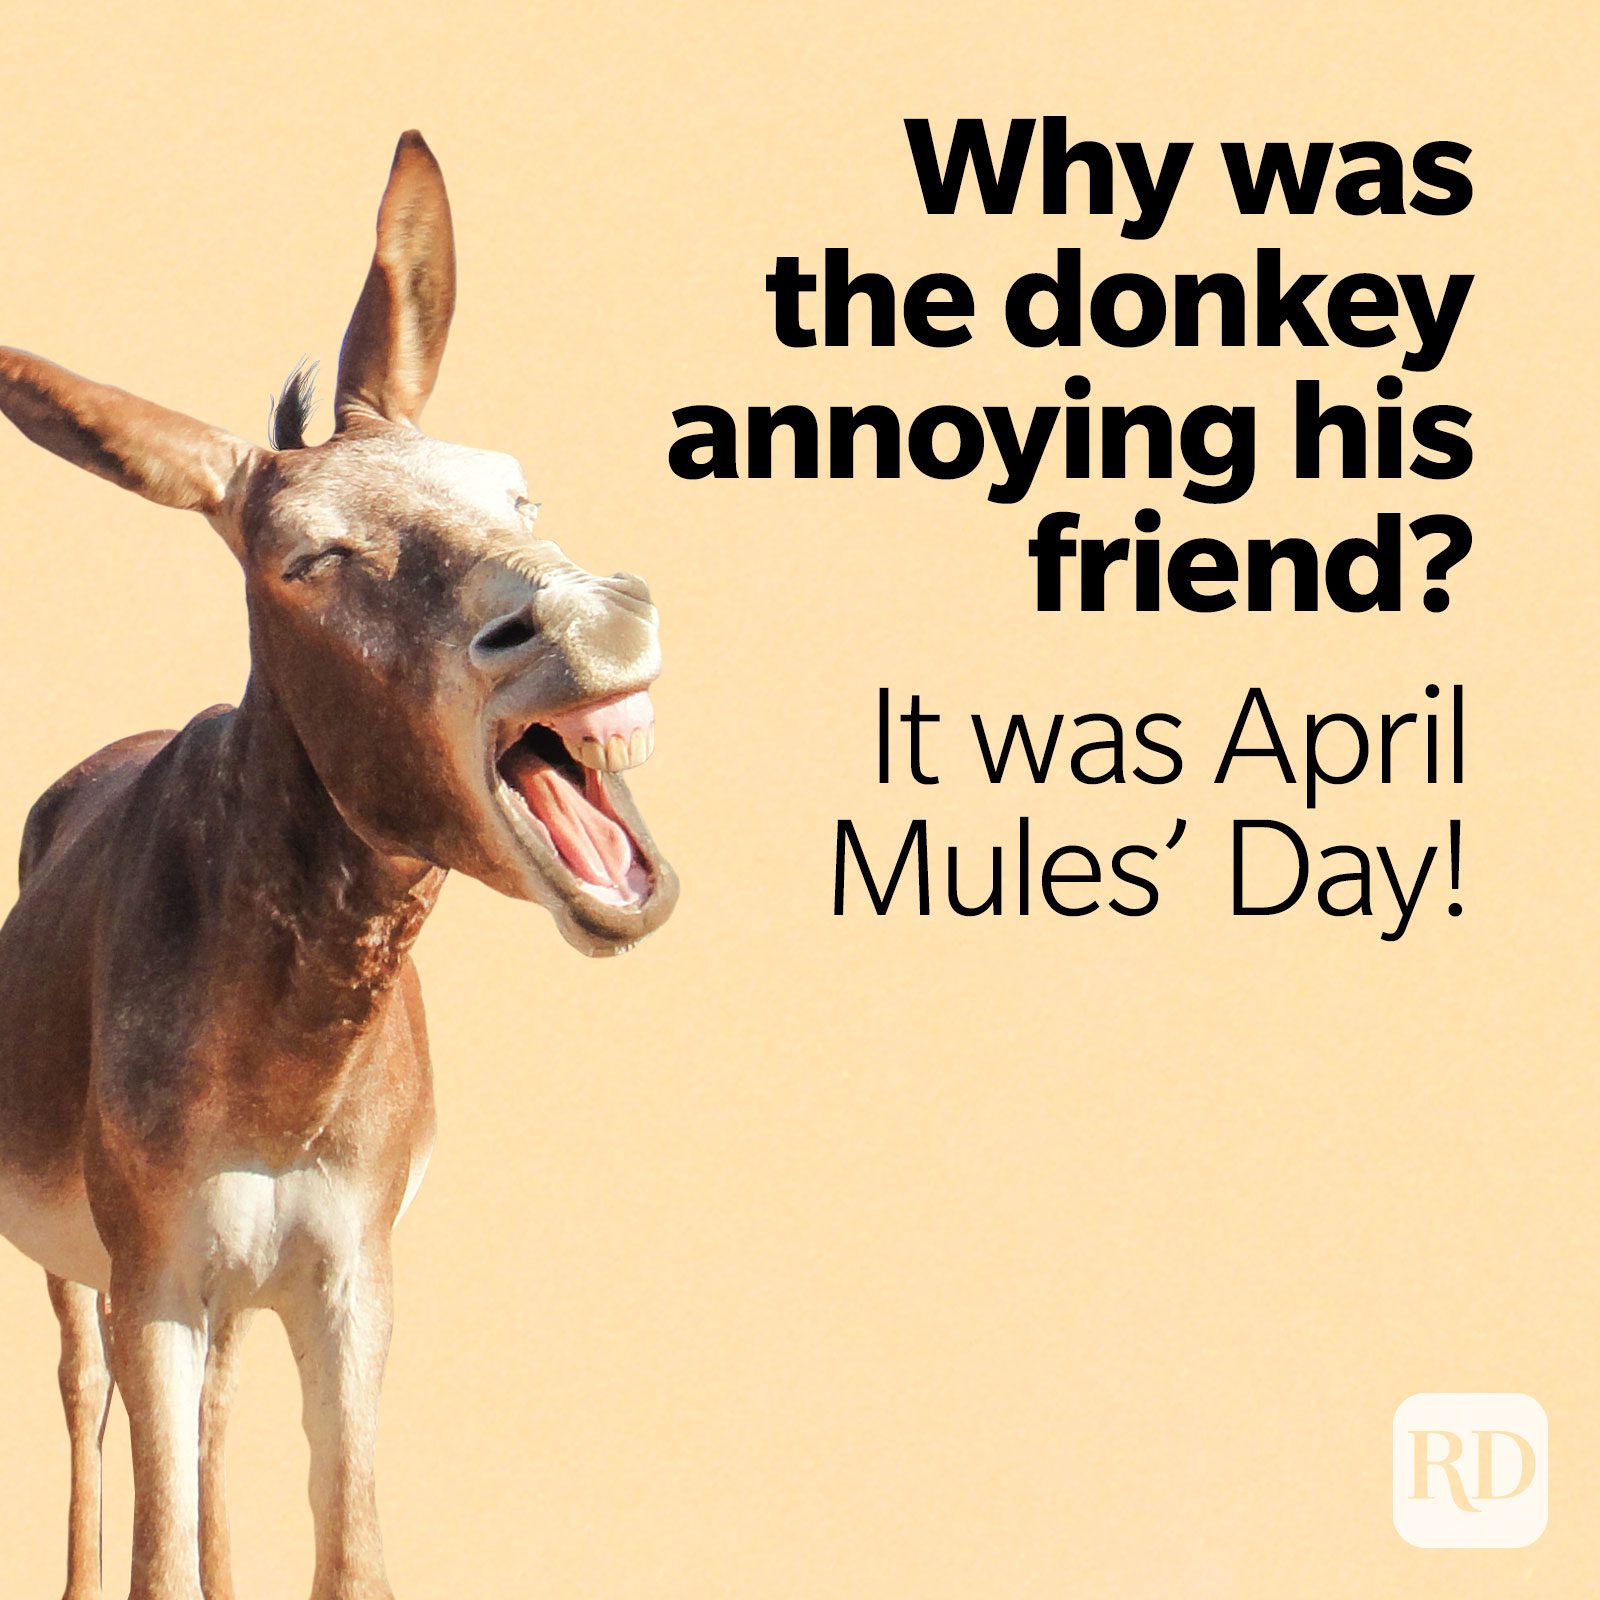 25 Funniest April Fools' Day Jokes Reader's Digest